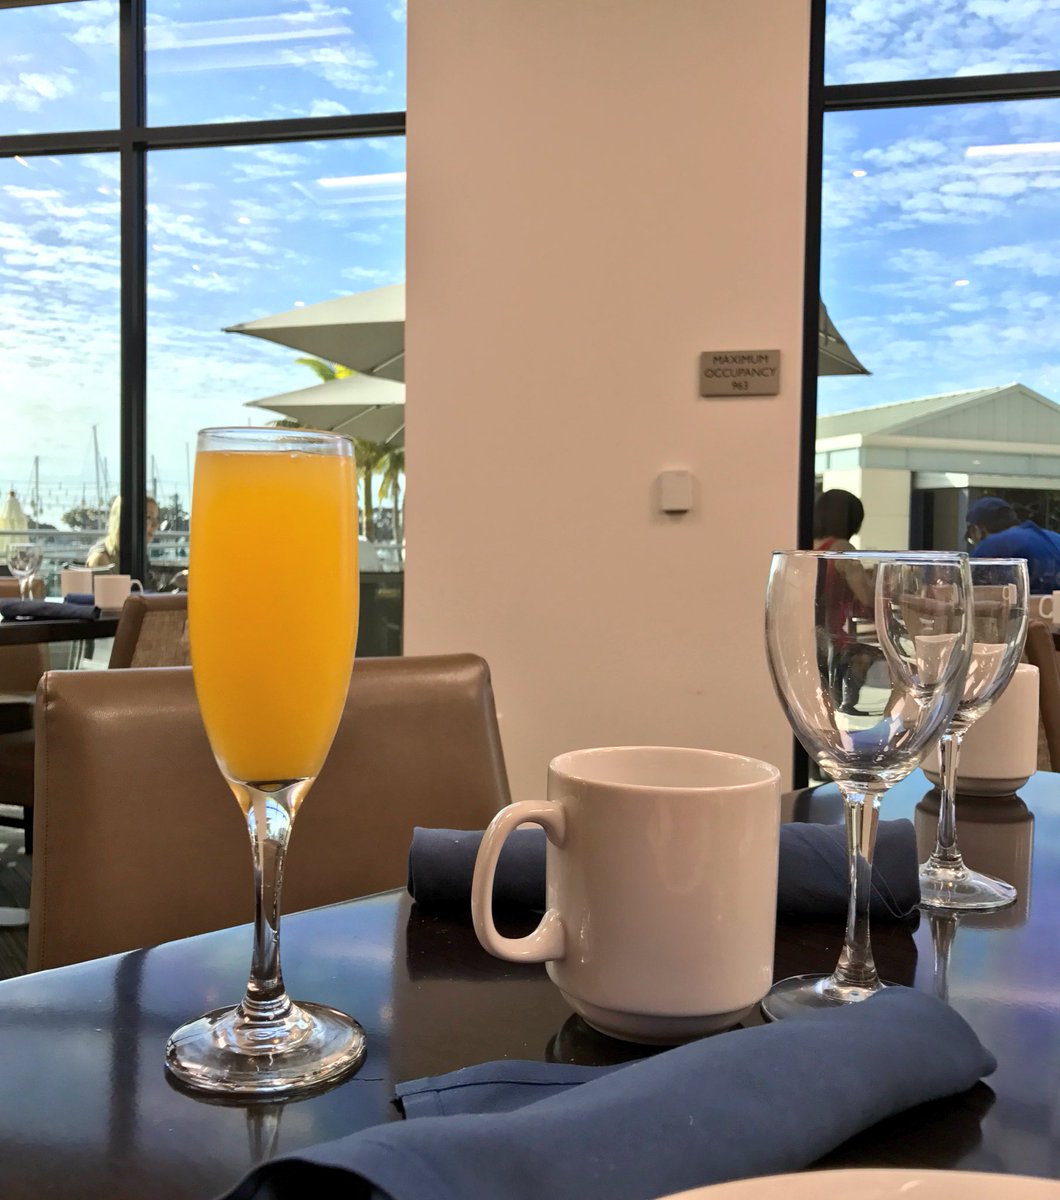 Breakfast at #seaviewrestaurant @GrandHyattSD endless #mimosas and yummy buffet. #delish #sandiego #california #socal